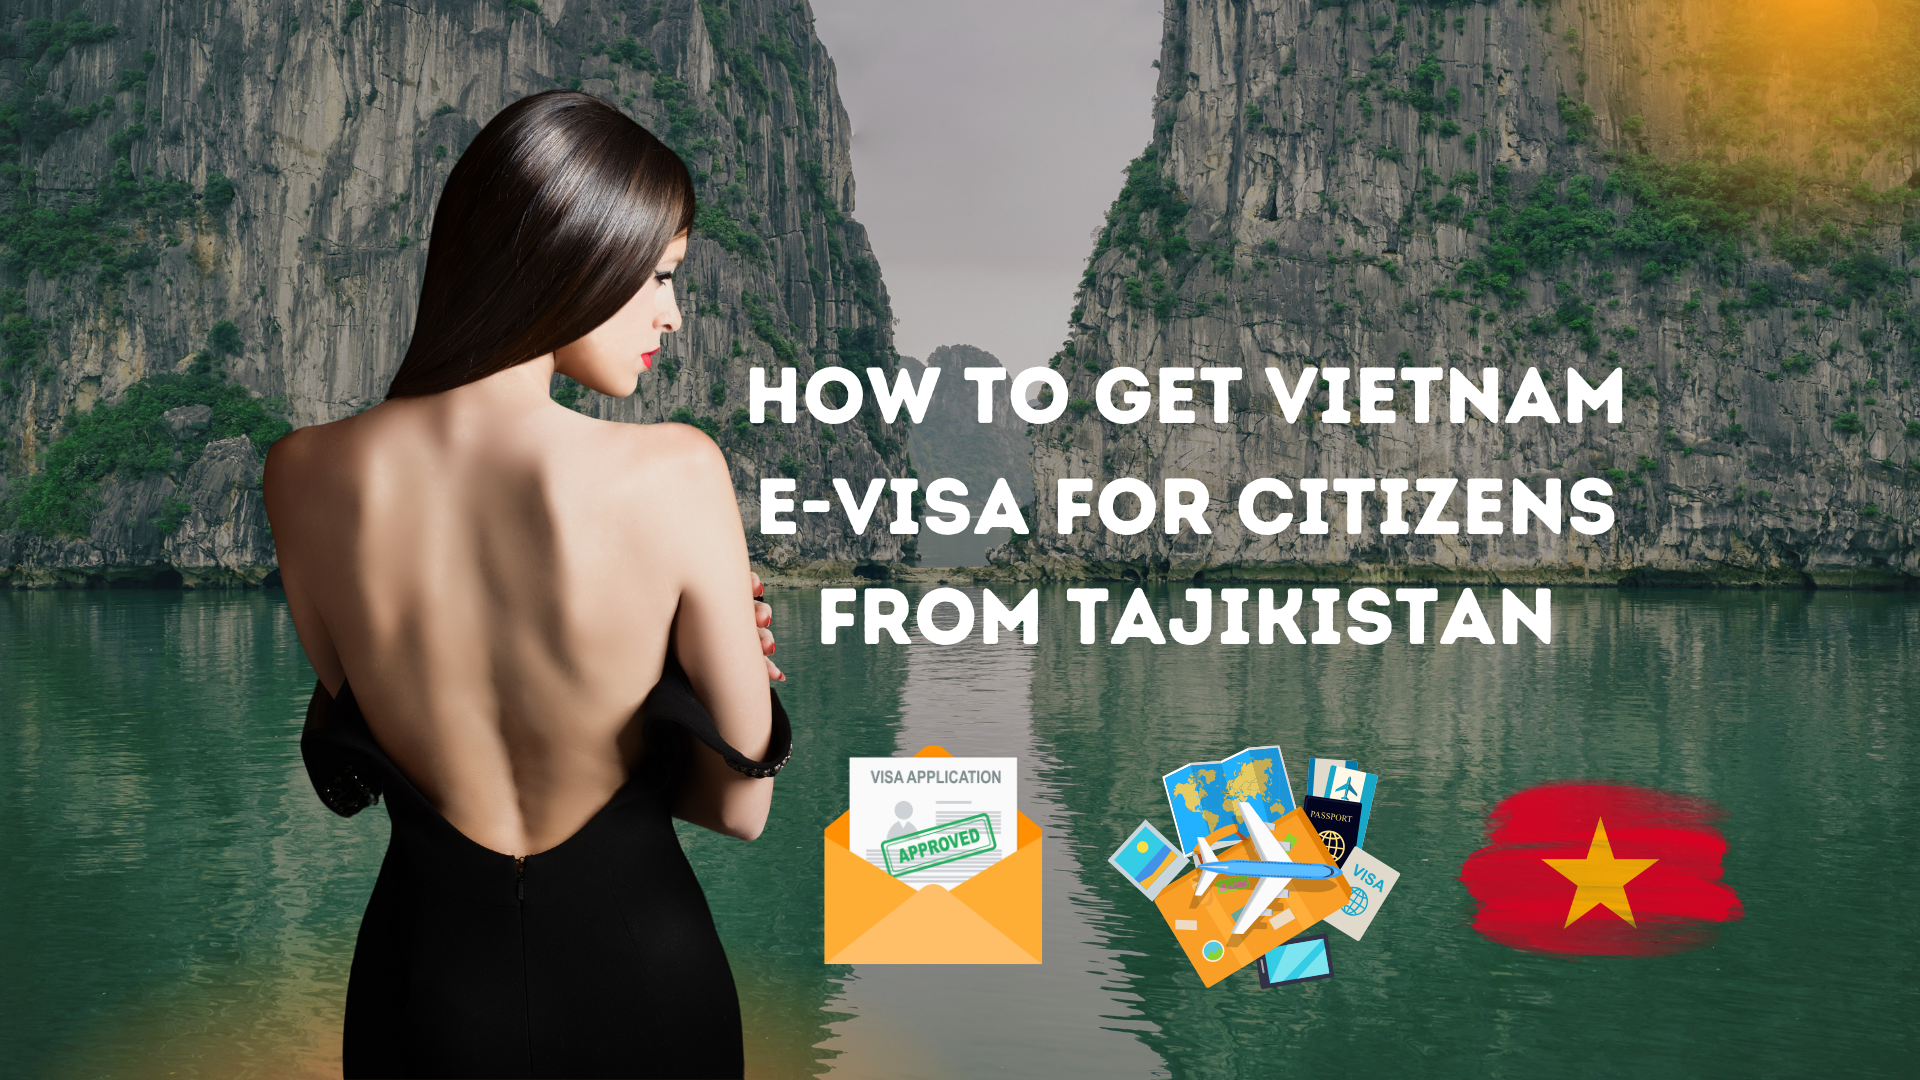 Vietnam Evisa for Citizens from Tajikistan